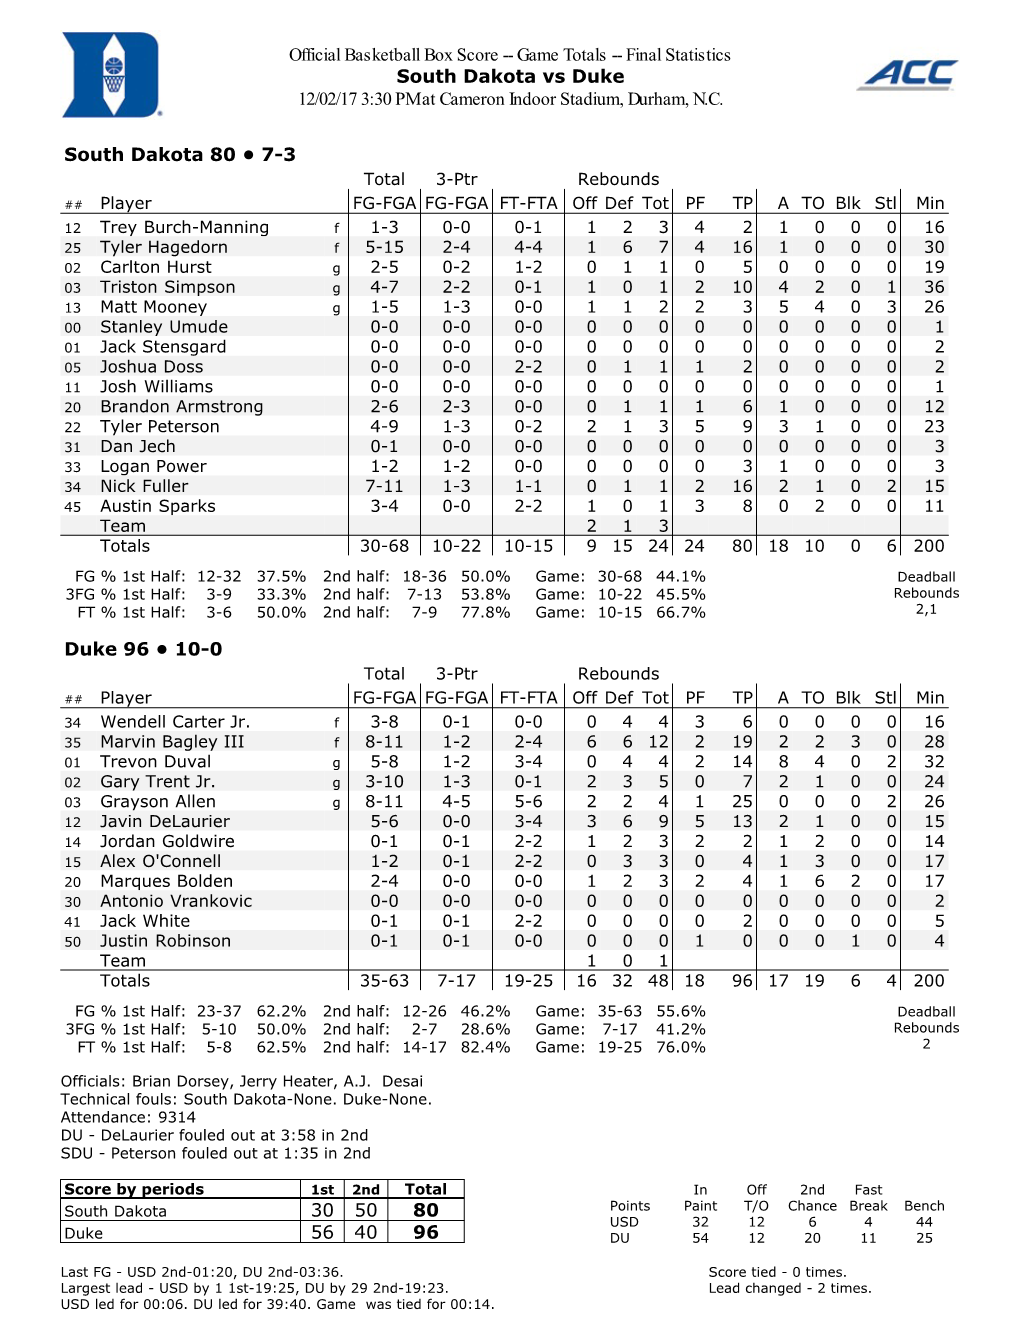 Official Basketball Box Score -- Game Totals -- Final Statistics South Dakota Vs Duke 12/02/17 3:30 PM at Cameron Indoor Stadium, Durham, N.C